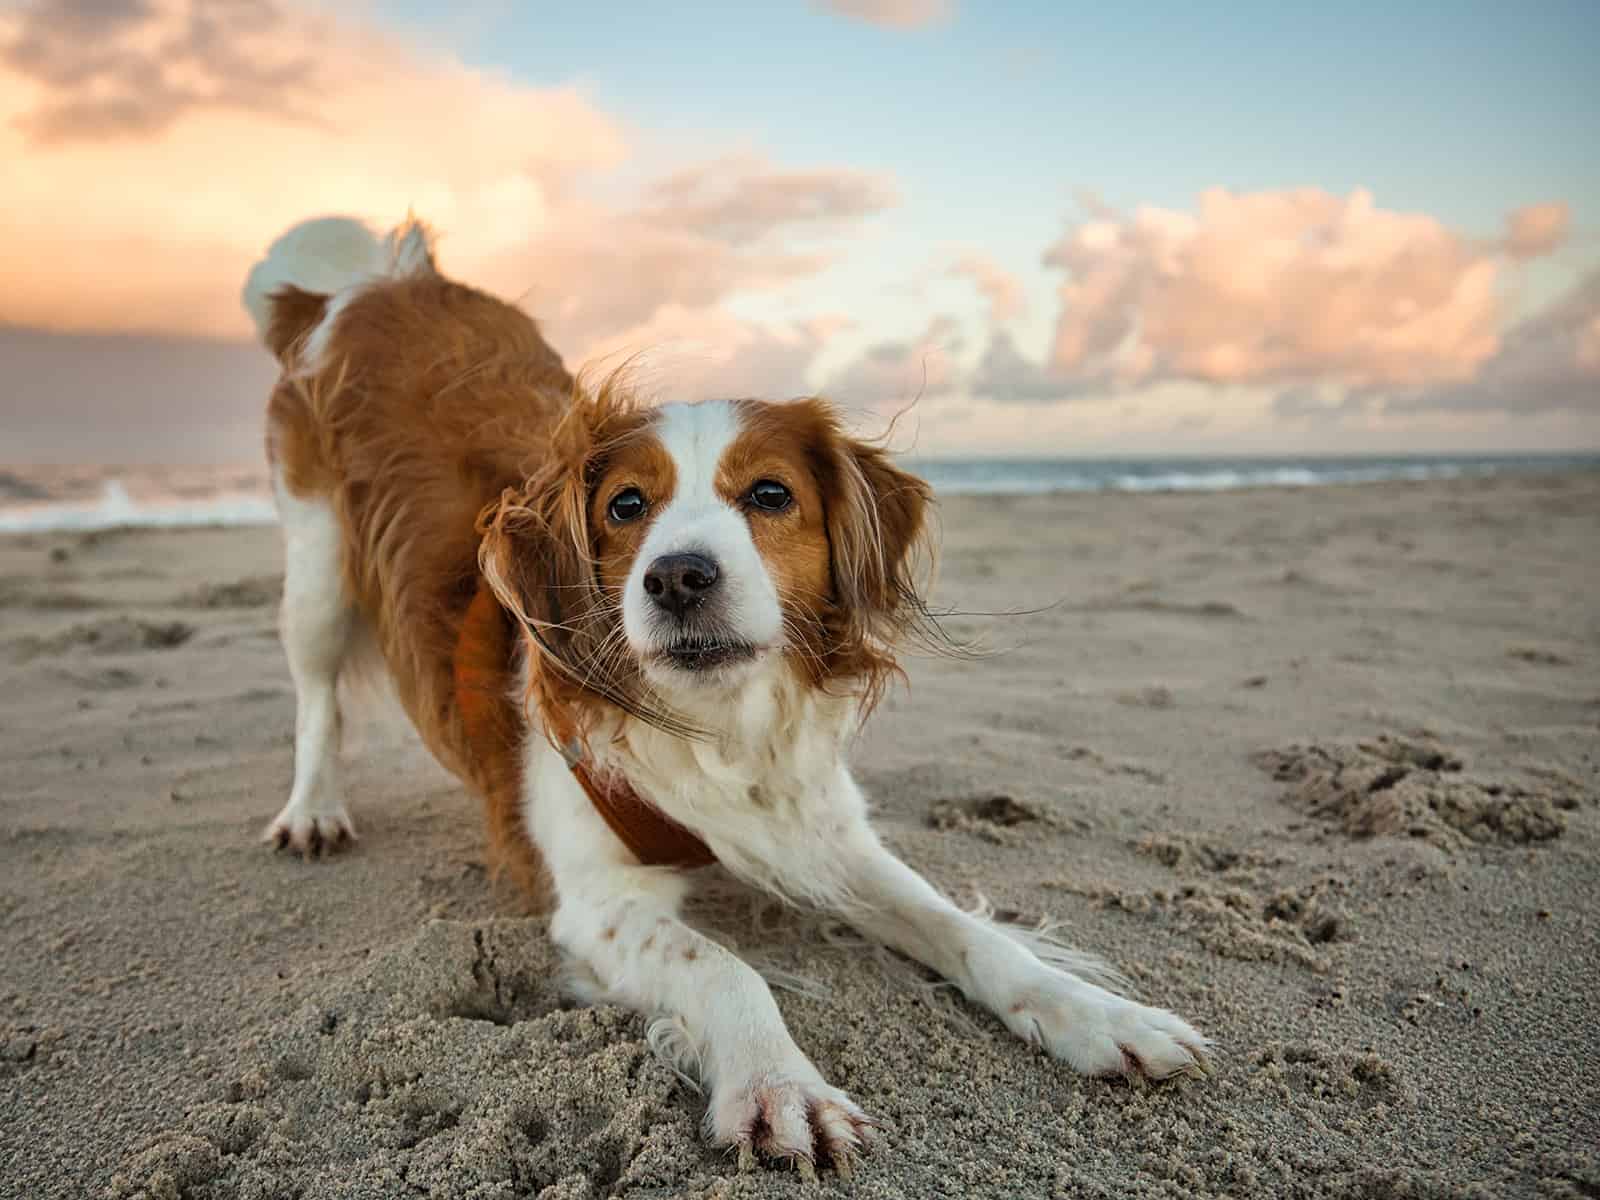 nederlandse kooikerhondje dog on beach